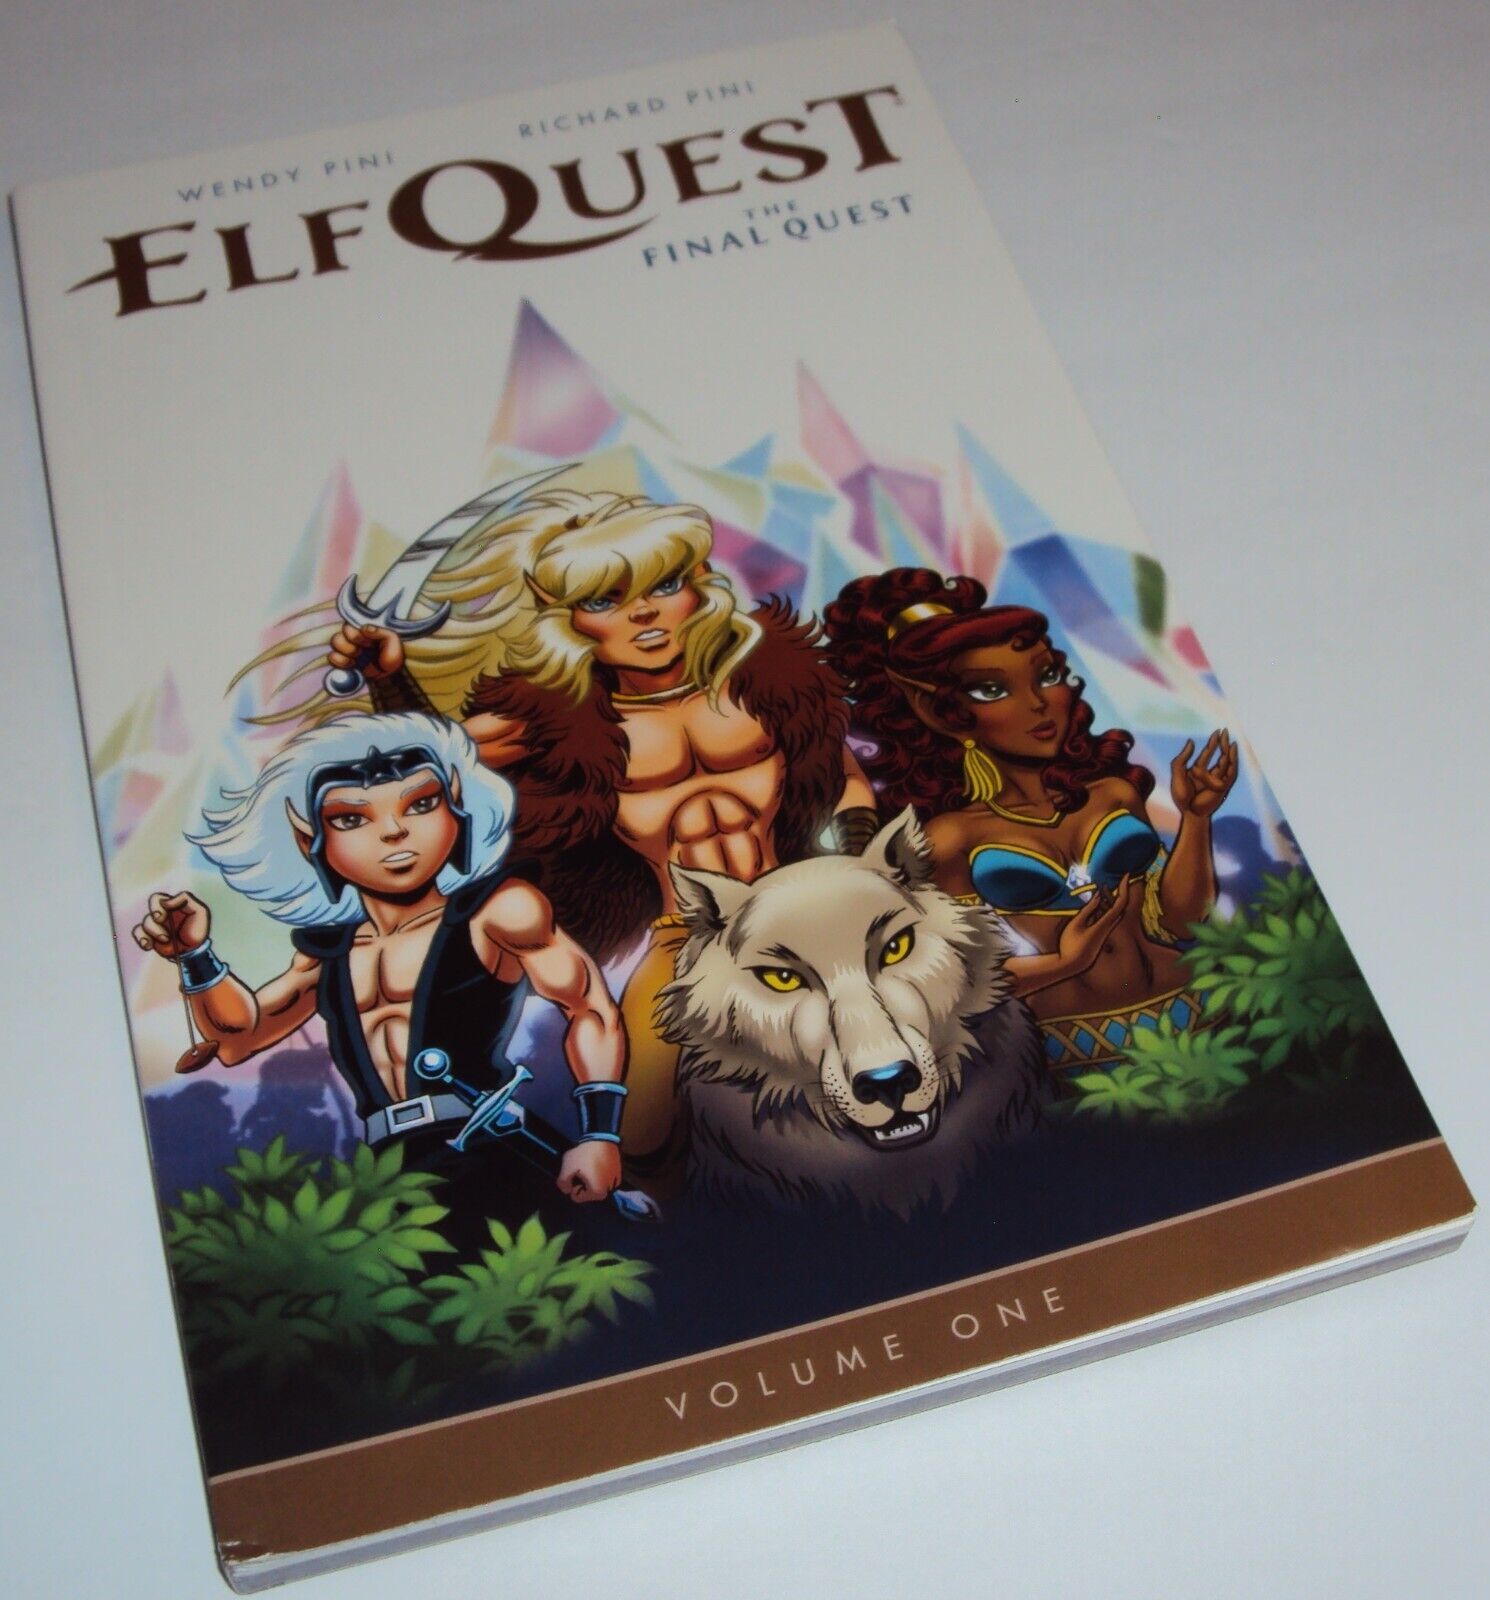 Elfquest The Final Quest Vol. # 1 One Wendy Pini Richard Dark Horse Comics Book